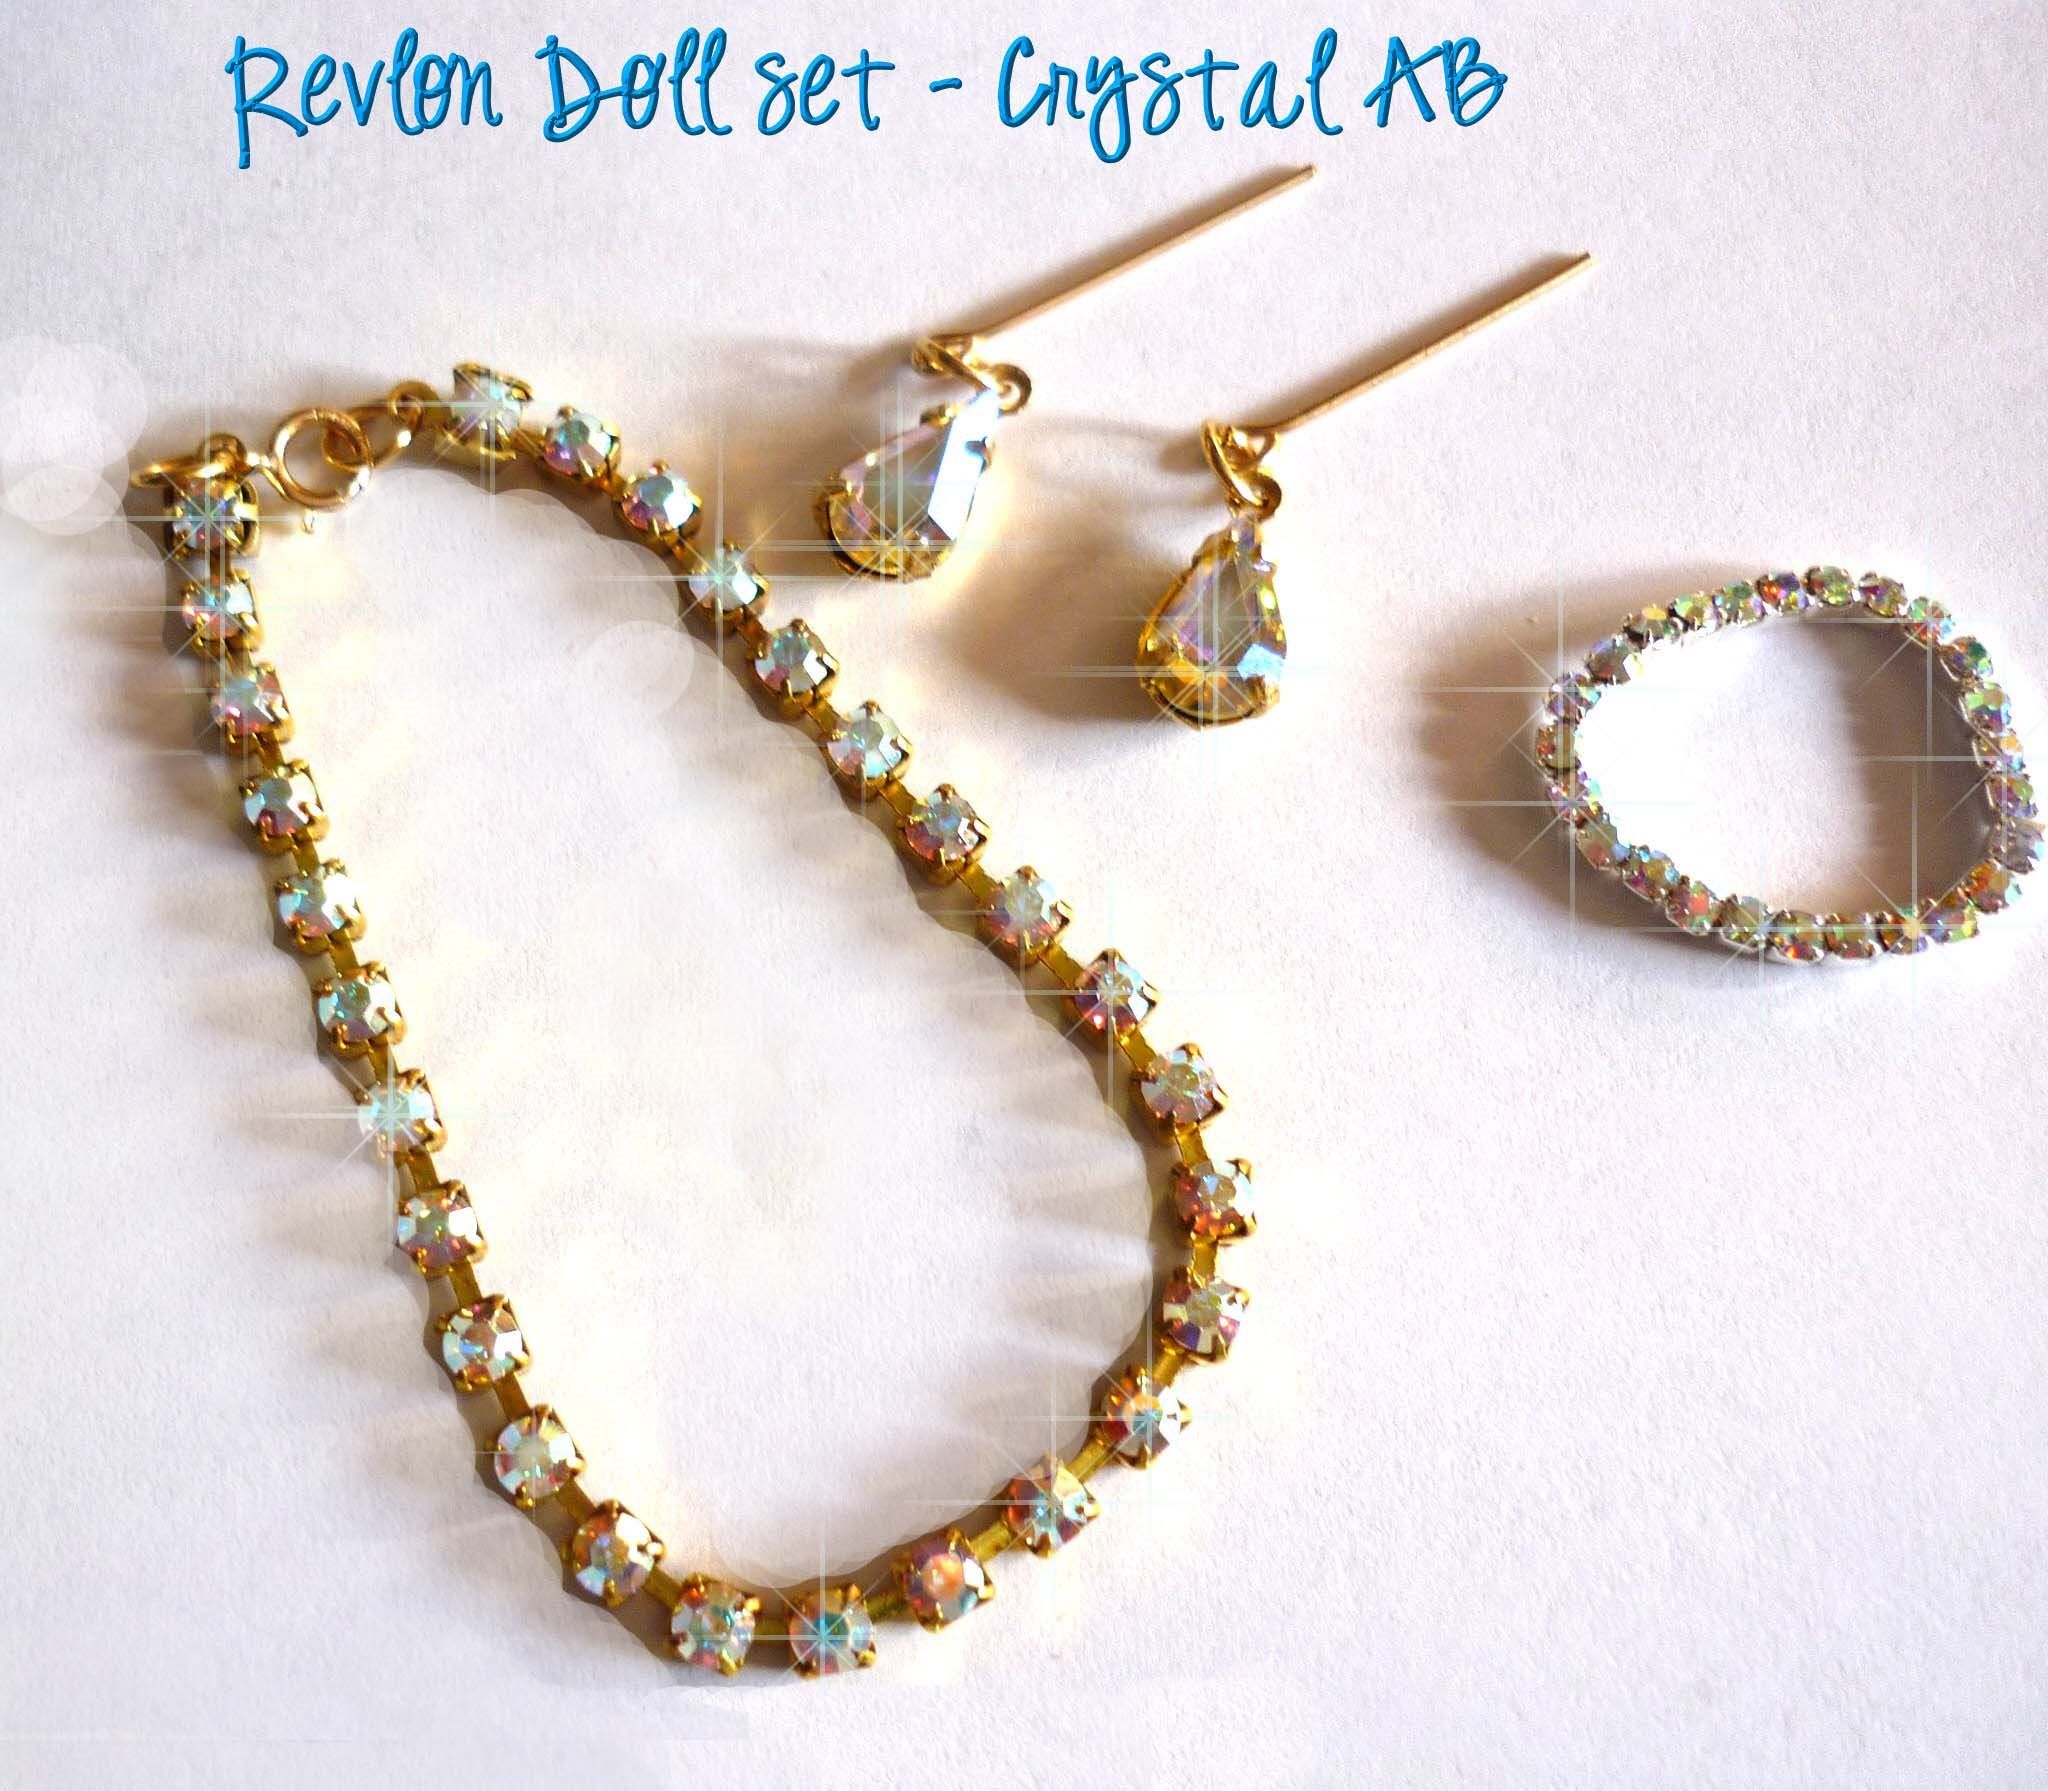 Crystal AB Rhinestone Jewelry Set 3 Pieces for Revlon Toni Uneeda 